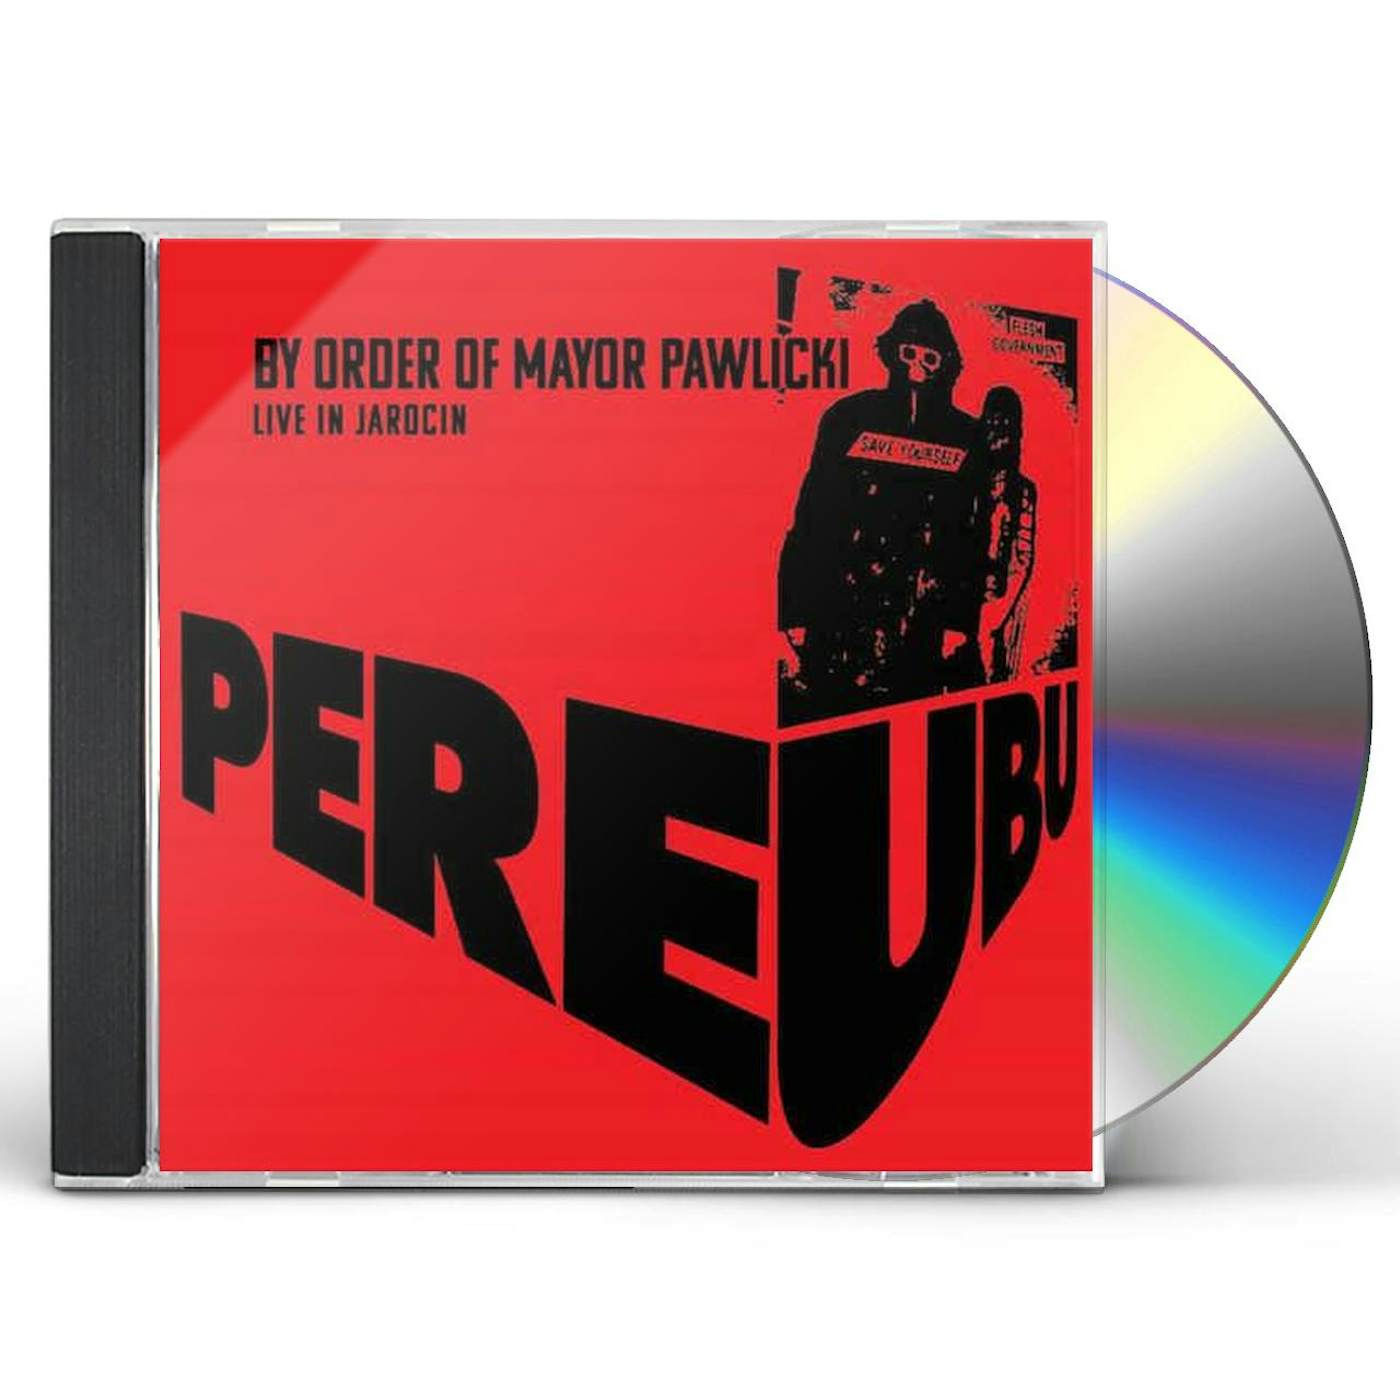 Pere Ubu BY ORDER OF MAYOR PAWLICKI (LIVE IN JAROCIN) CD